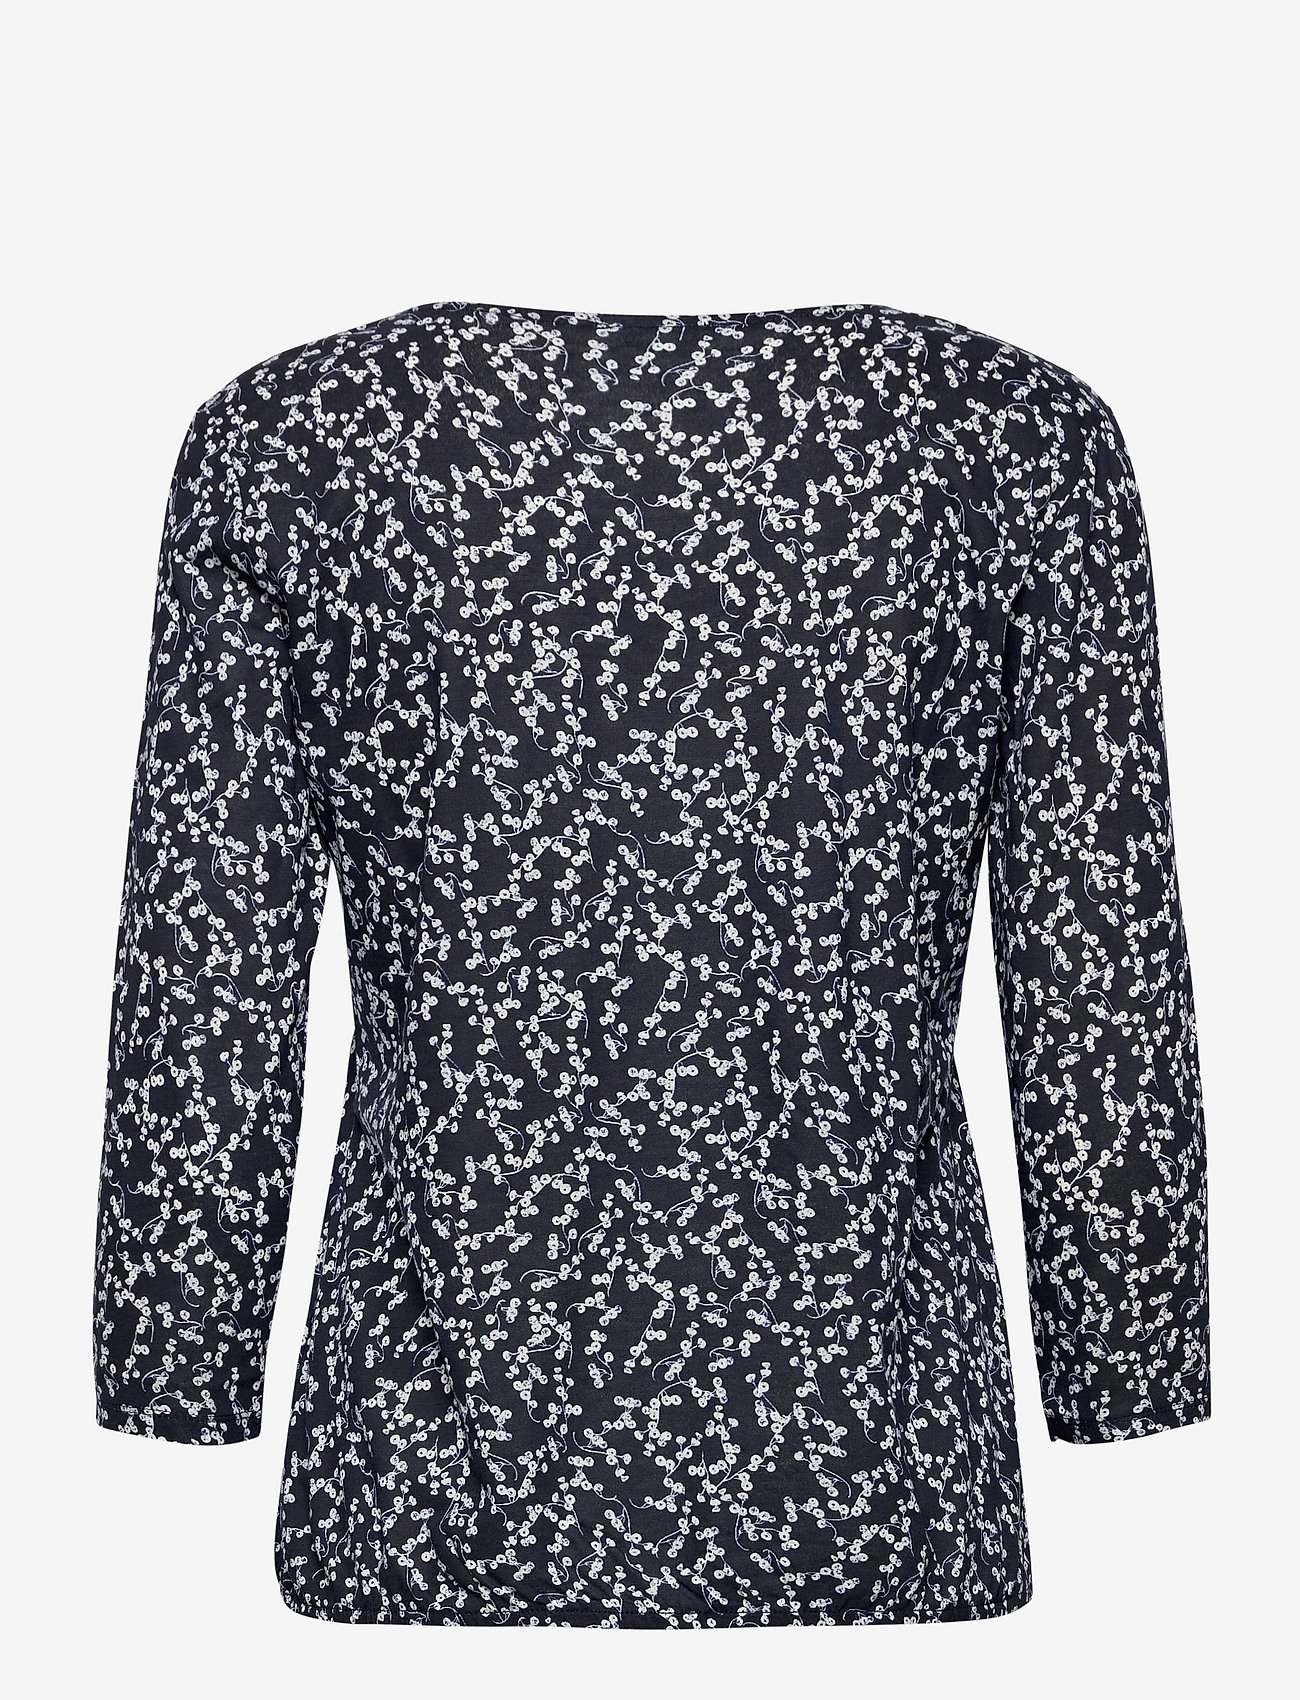 Tom T-shirt Blou (Navy Flowery Design) - 99.50 kr | Boozt.com